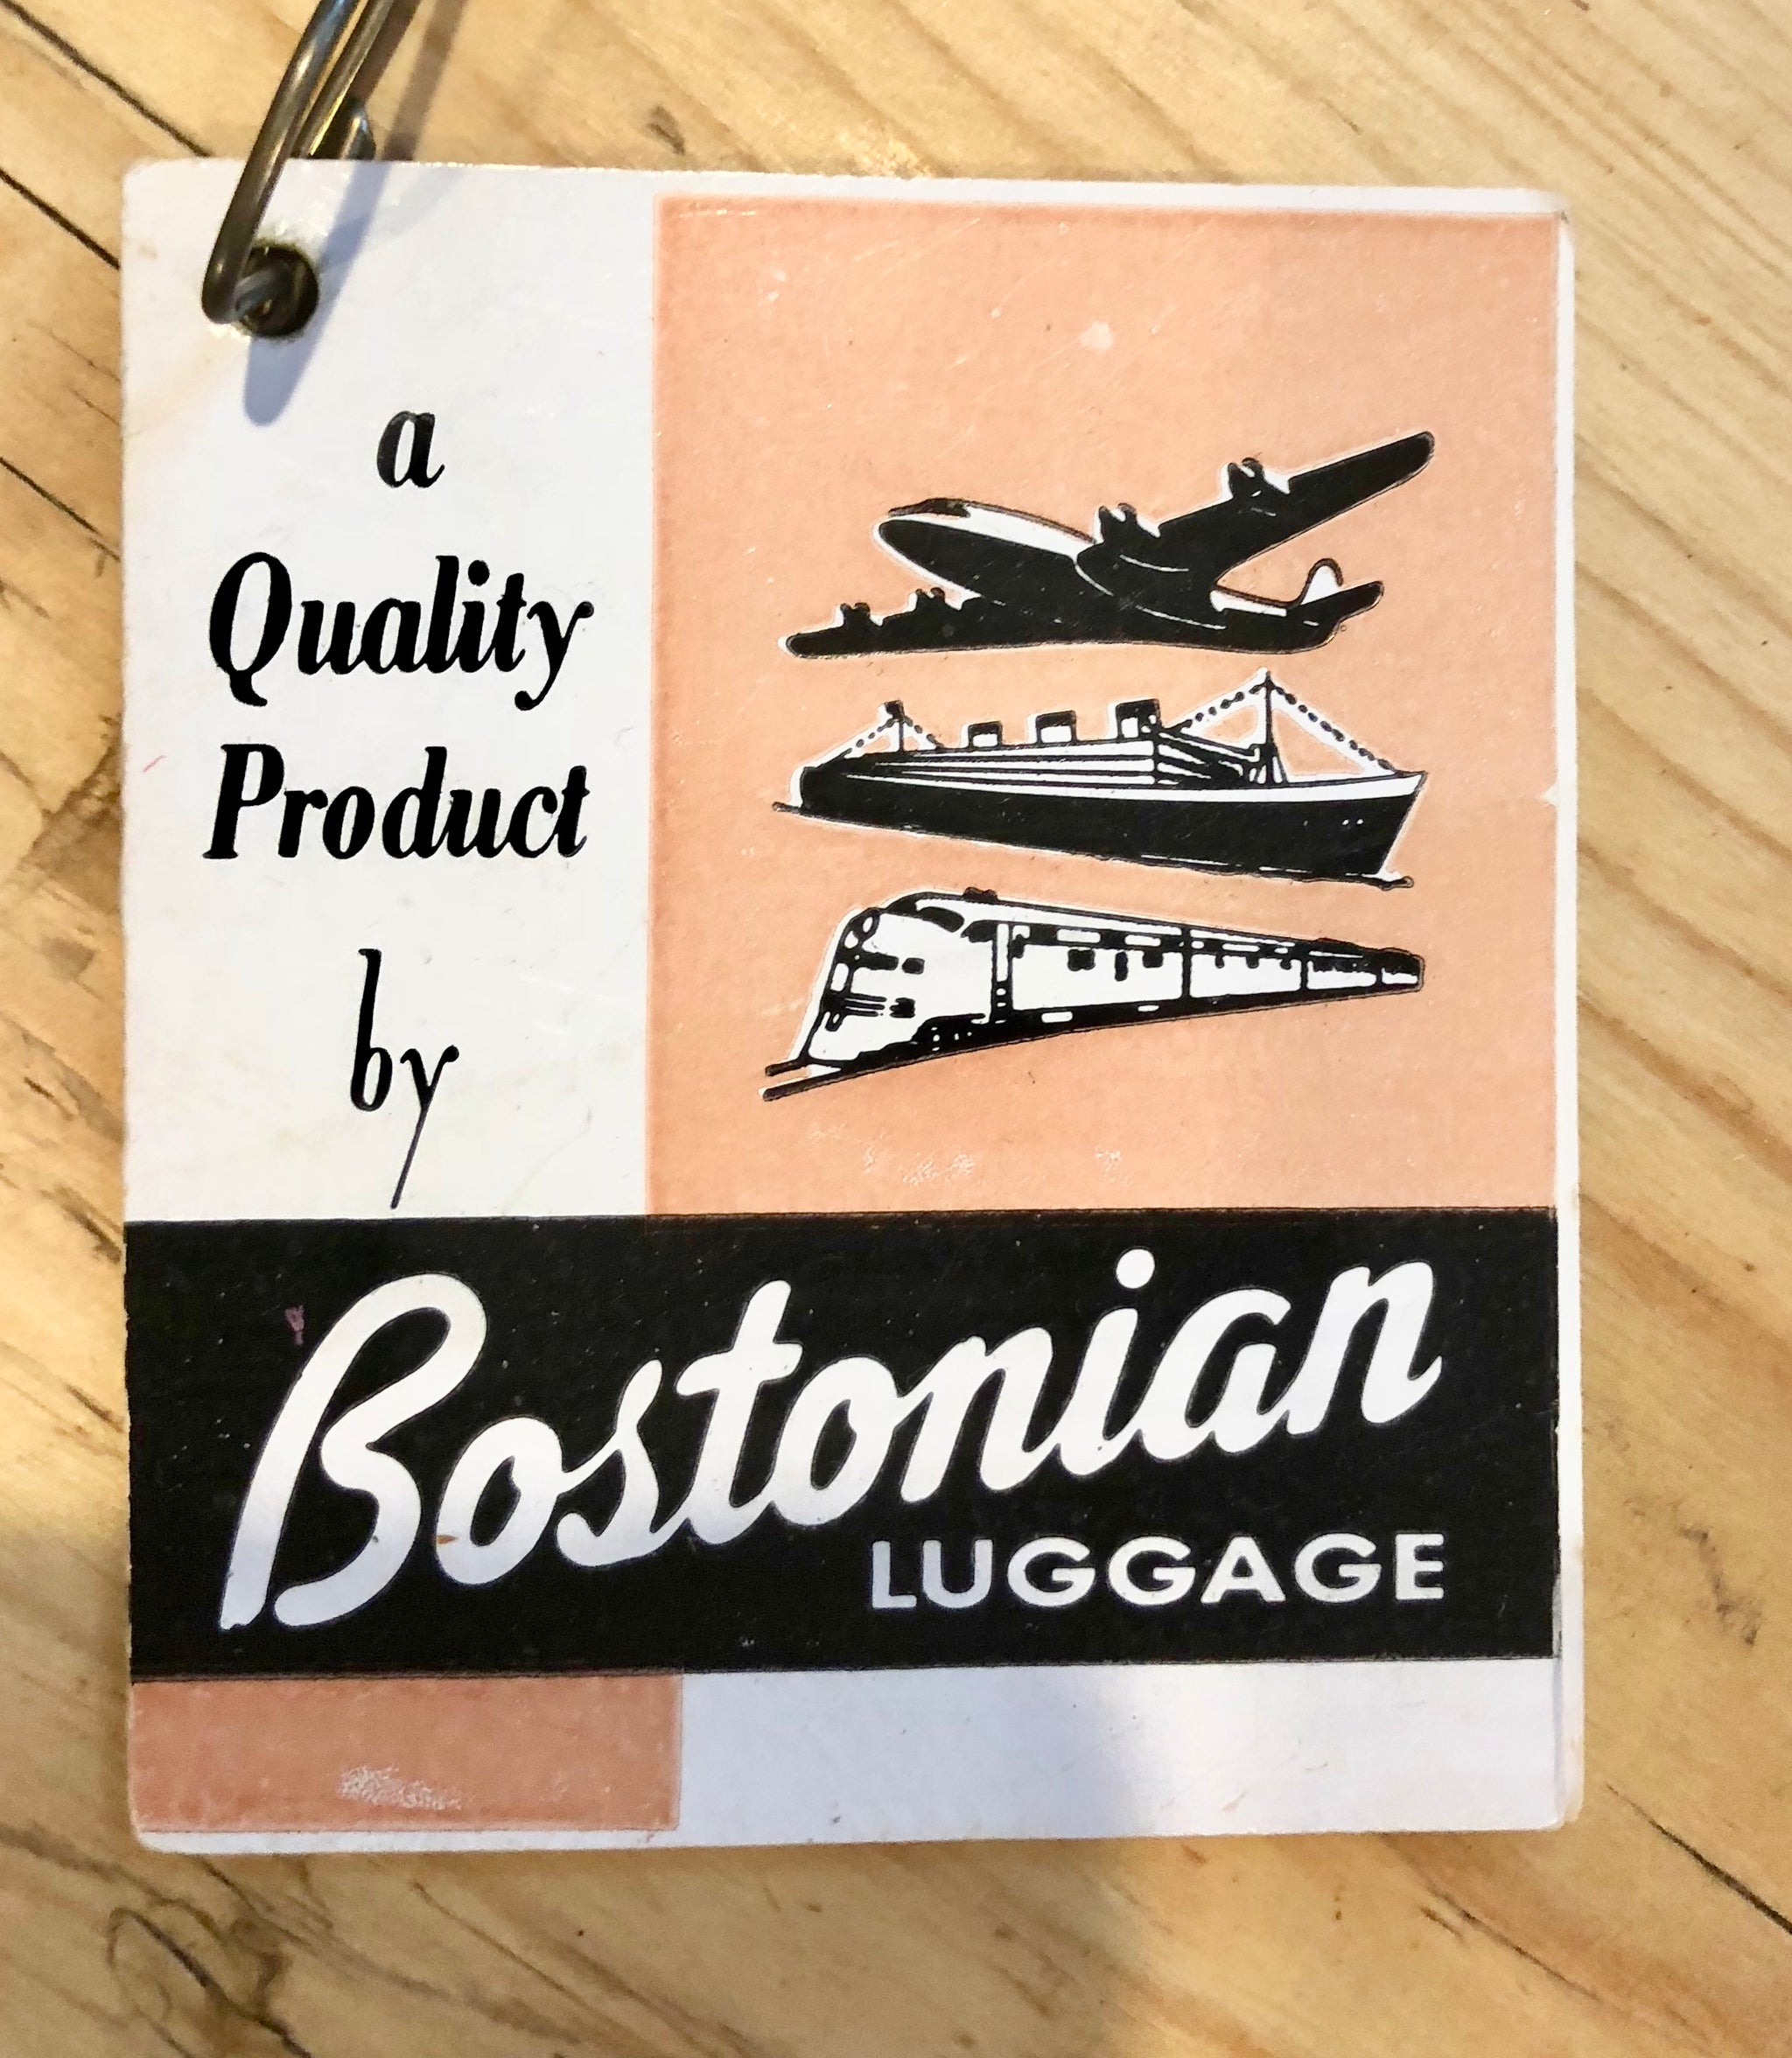 Bostonian Luggage and my grandfather